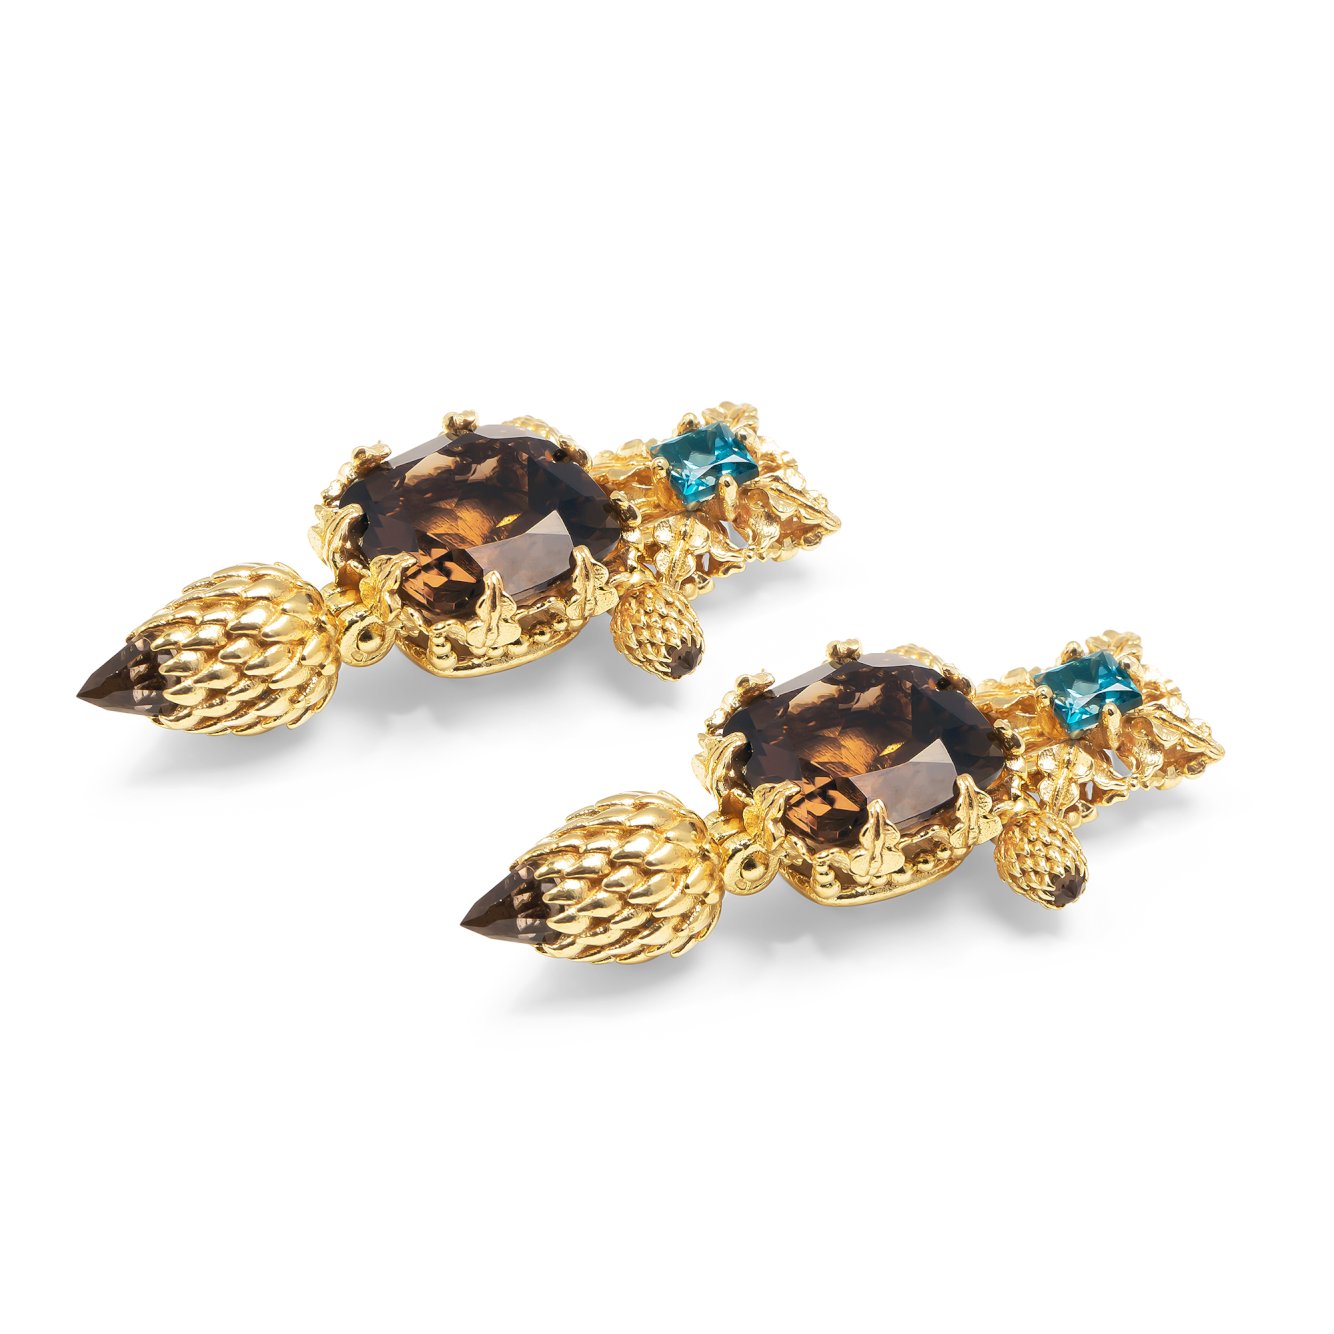 Dendera Gold earrings